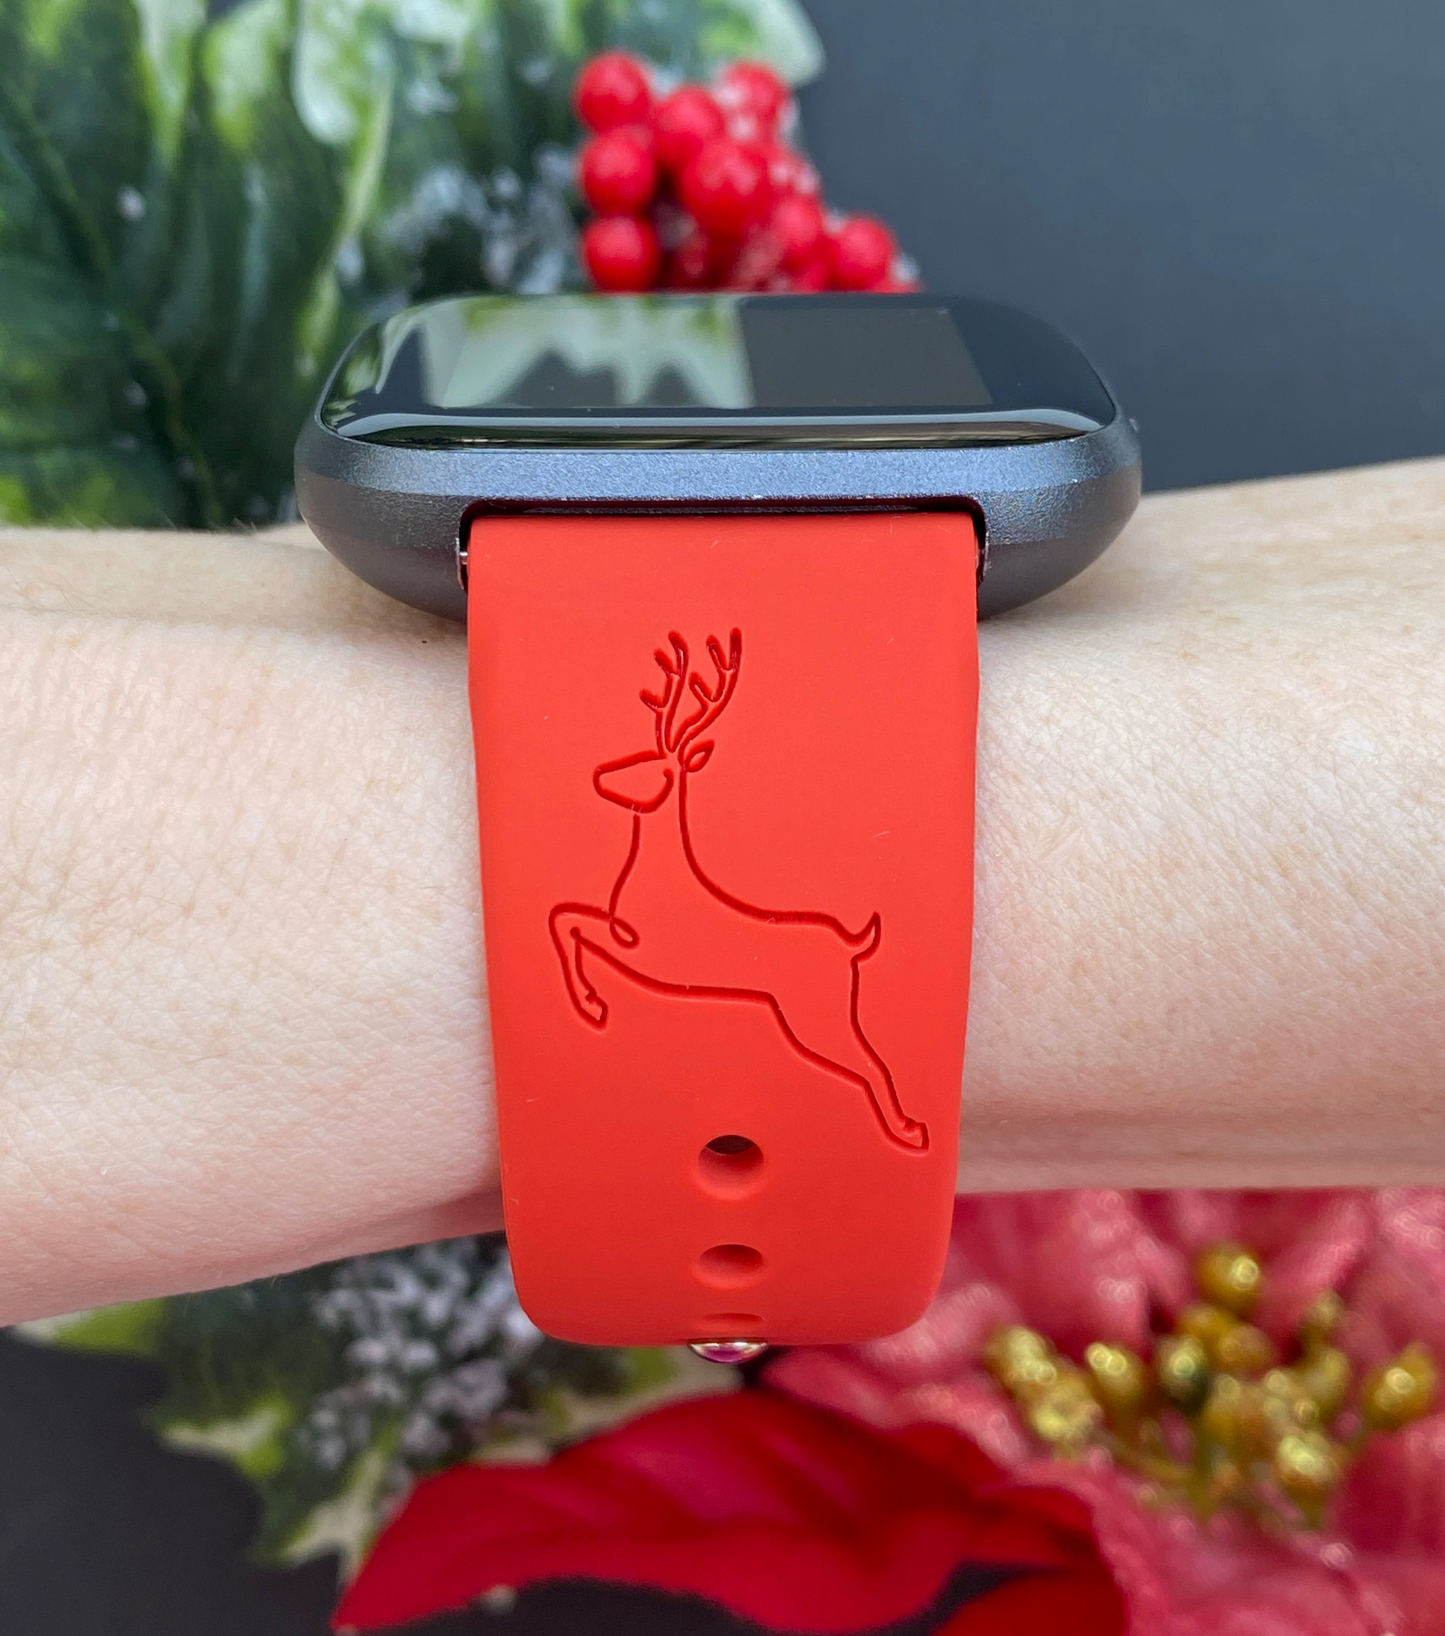 Reindeer Fitbit Versa 1/2 Watch Band